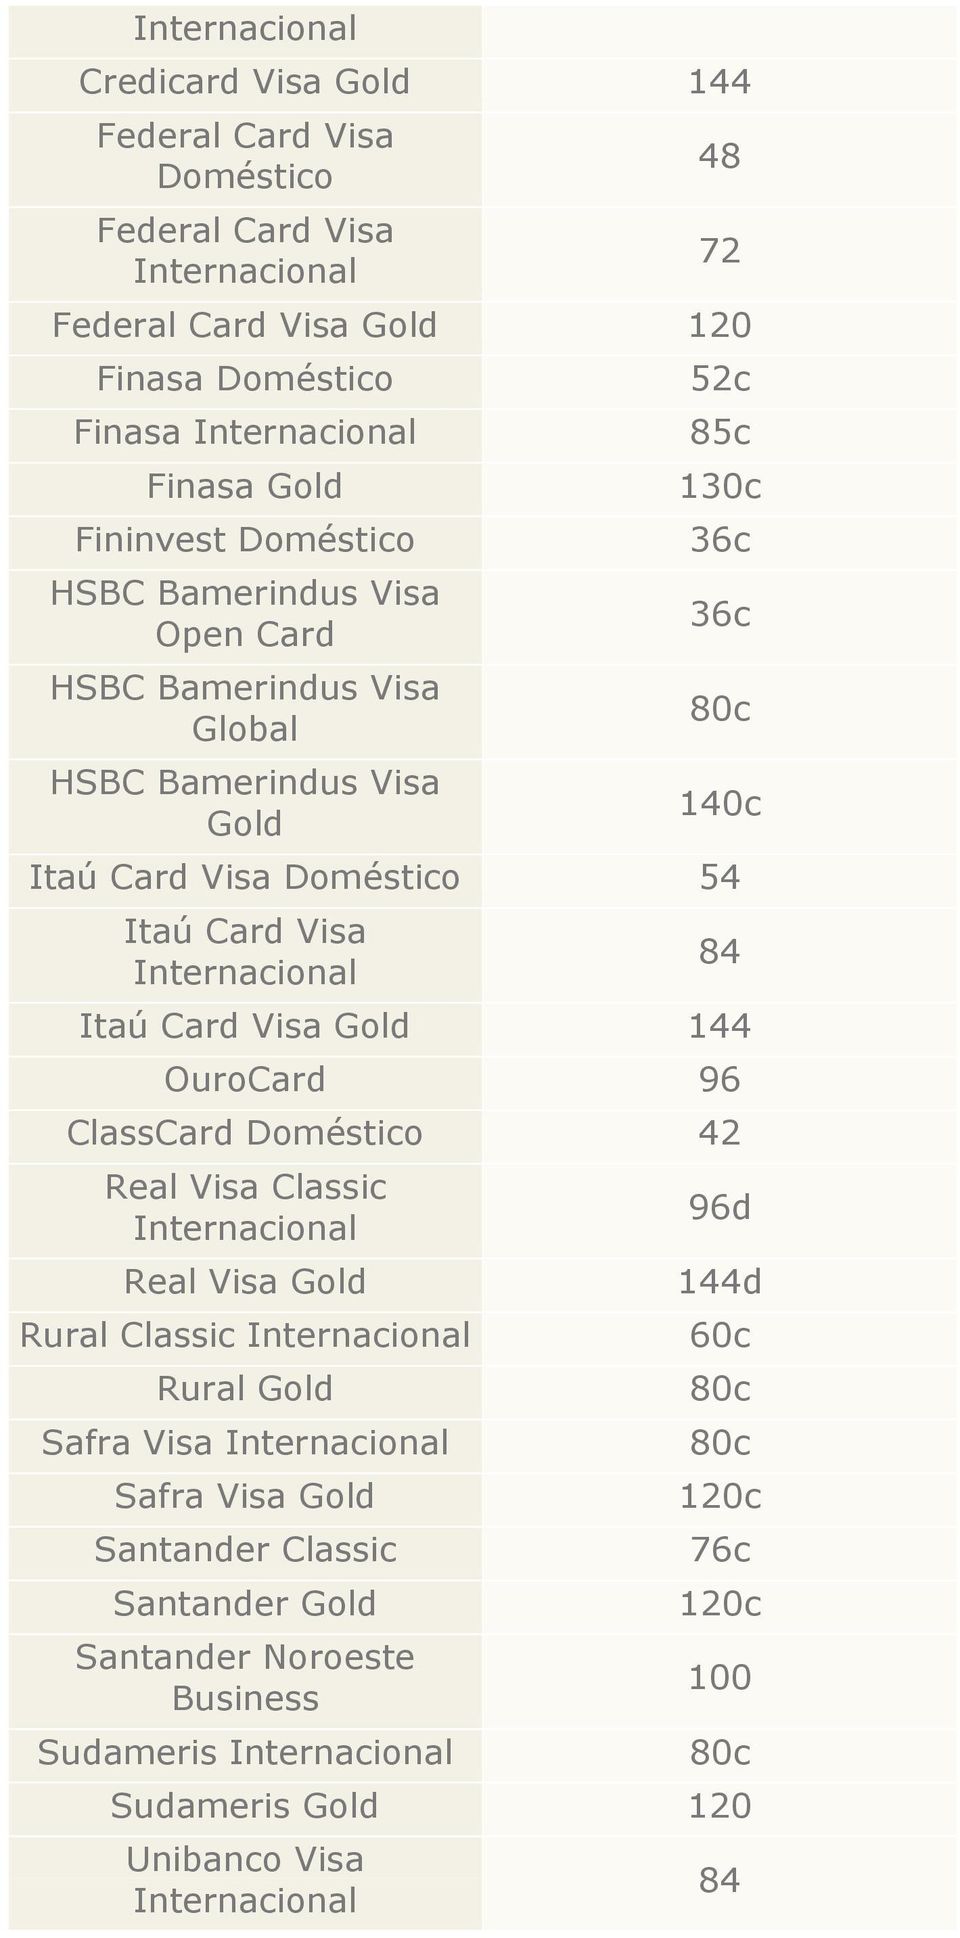 Doméstico 54 Itaú Card Visa 84 Itaú Card Visa 144 OuroCard 96 ClassCard Doméstico 42 Real Visa Classic Real Visa Rural Classic Rural